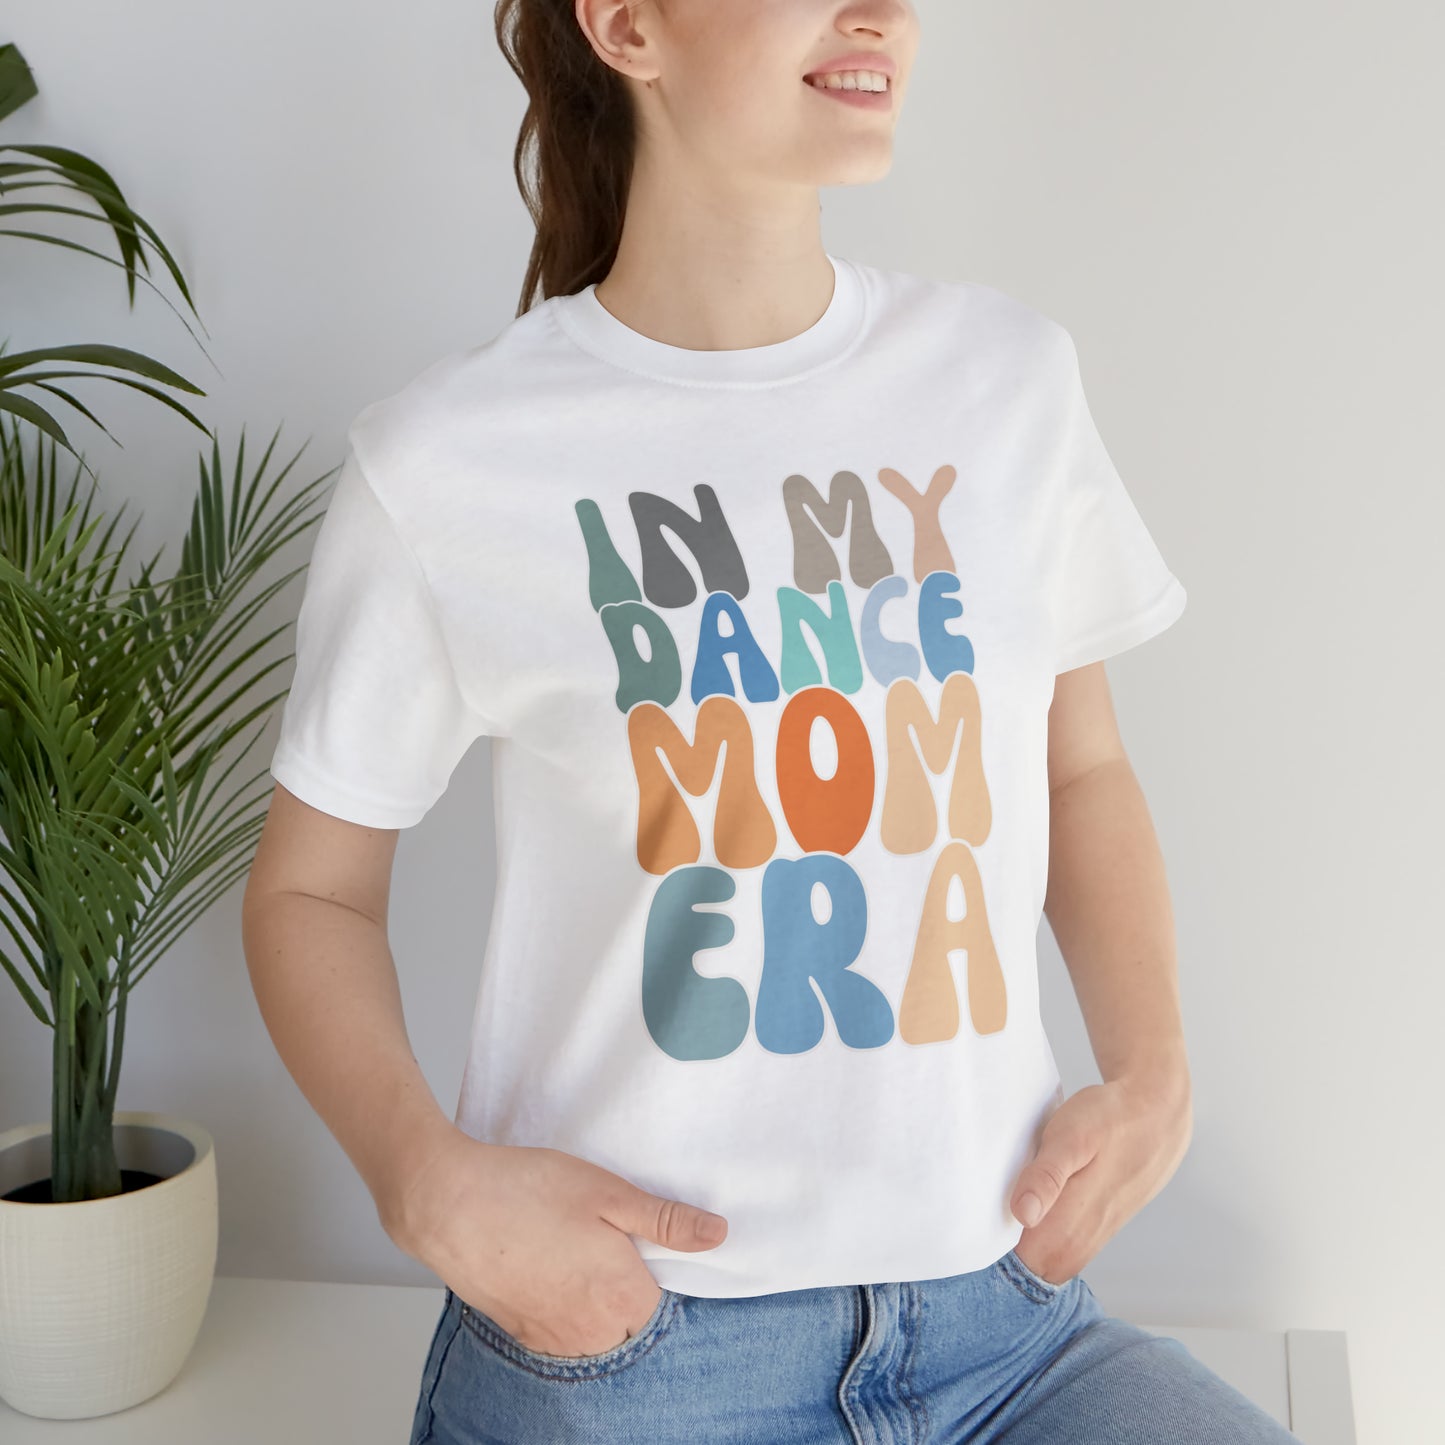 Dancer Shirt for Mom, In My Dance Mom Era Shirt, Dancing Master Shirt, Shirt for Dancer, T368